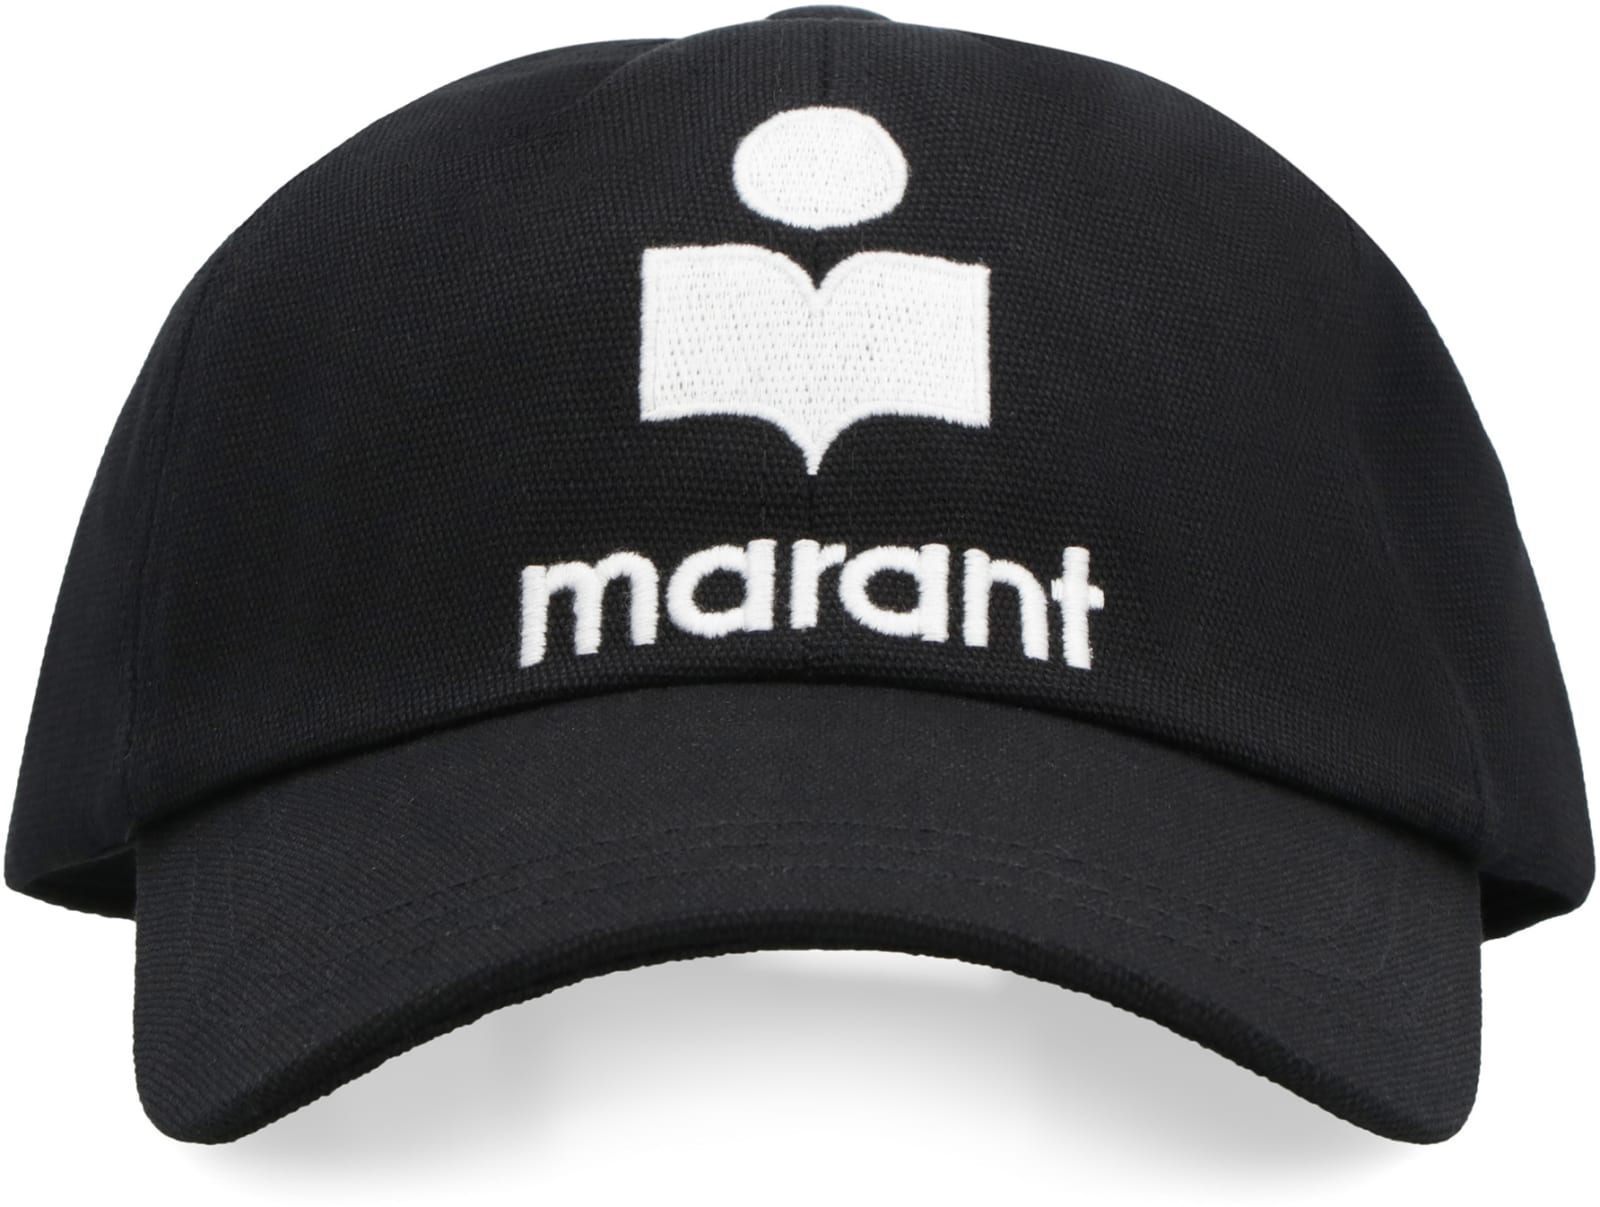 Shop Isabel Marant Tyron Logo Baseball Cap In Black